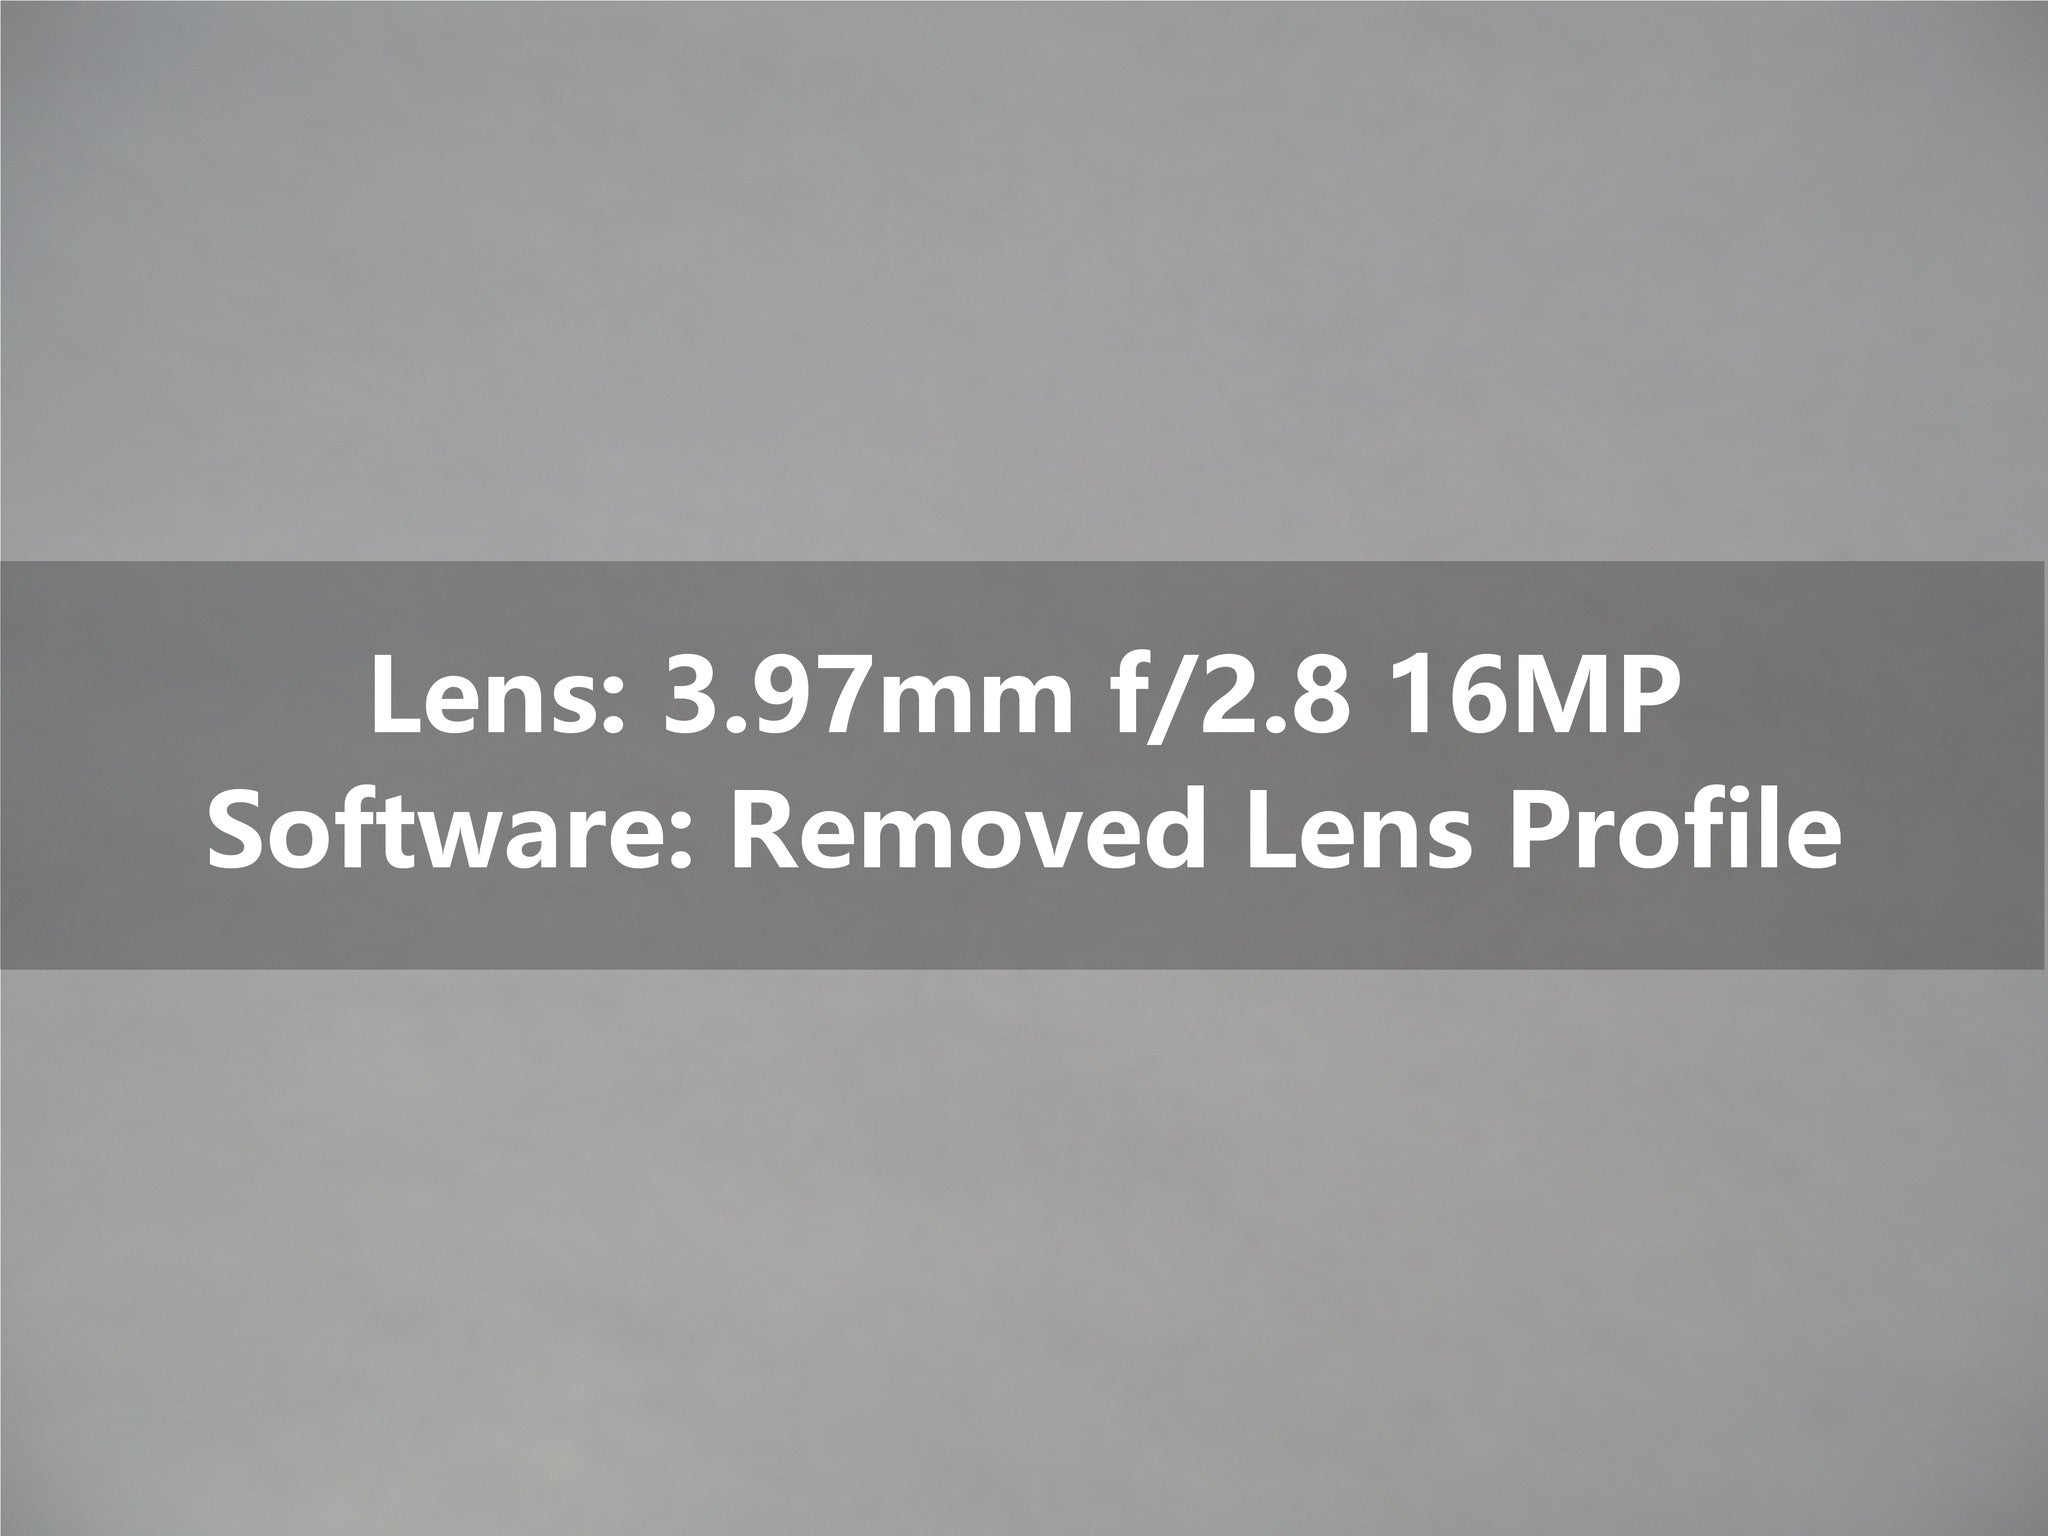 Service: Remove GoPro Lens Profile<br/>(No Pink Corners)